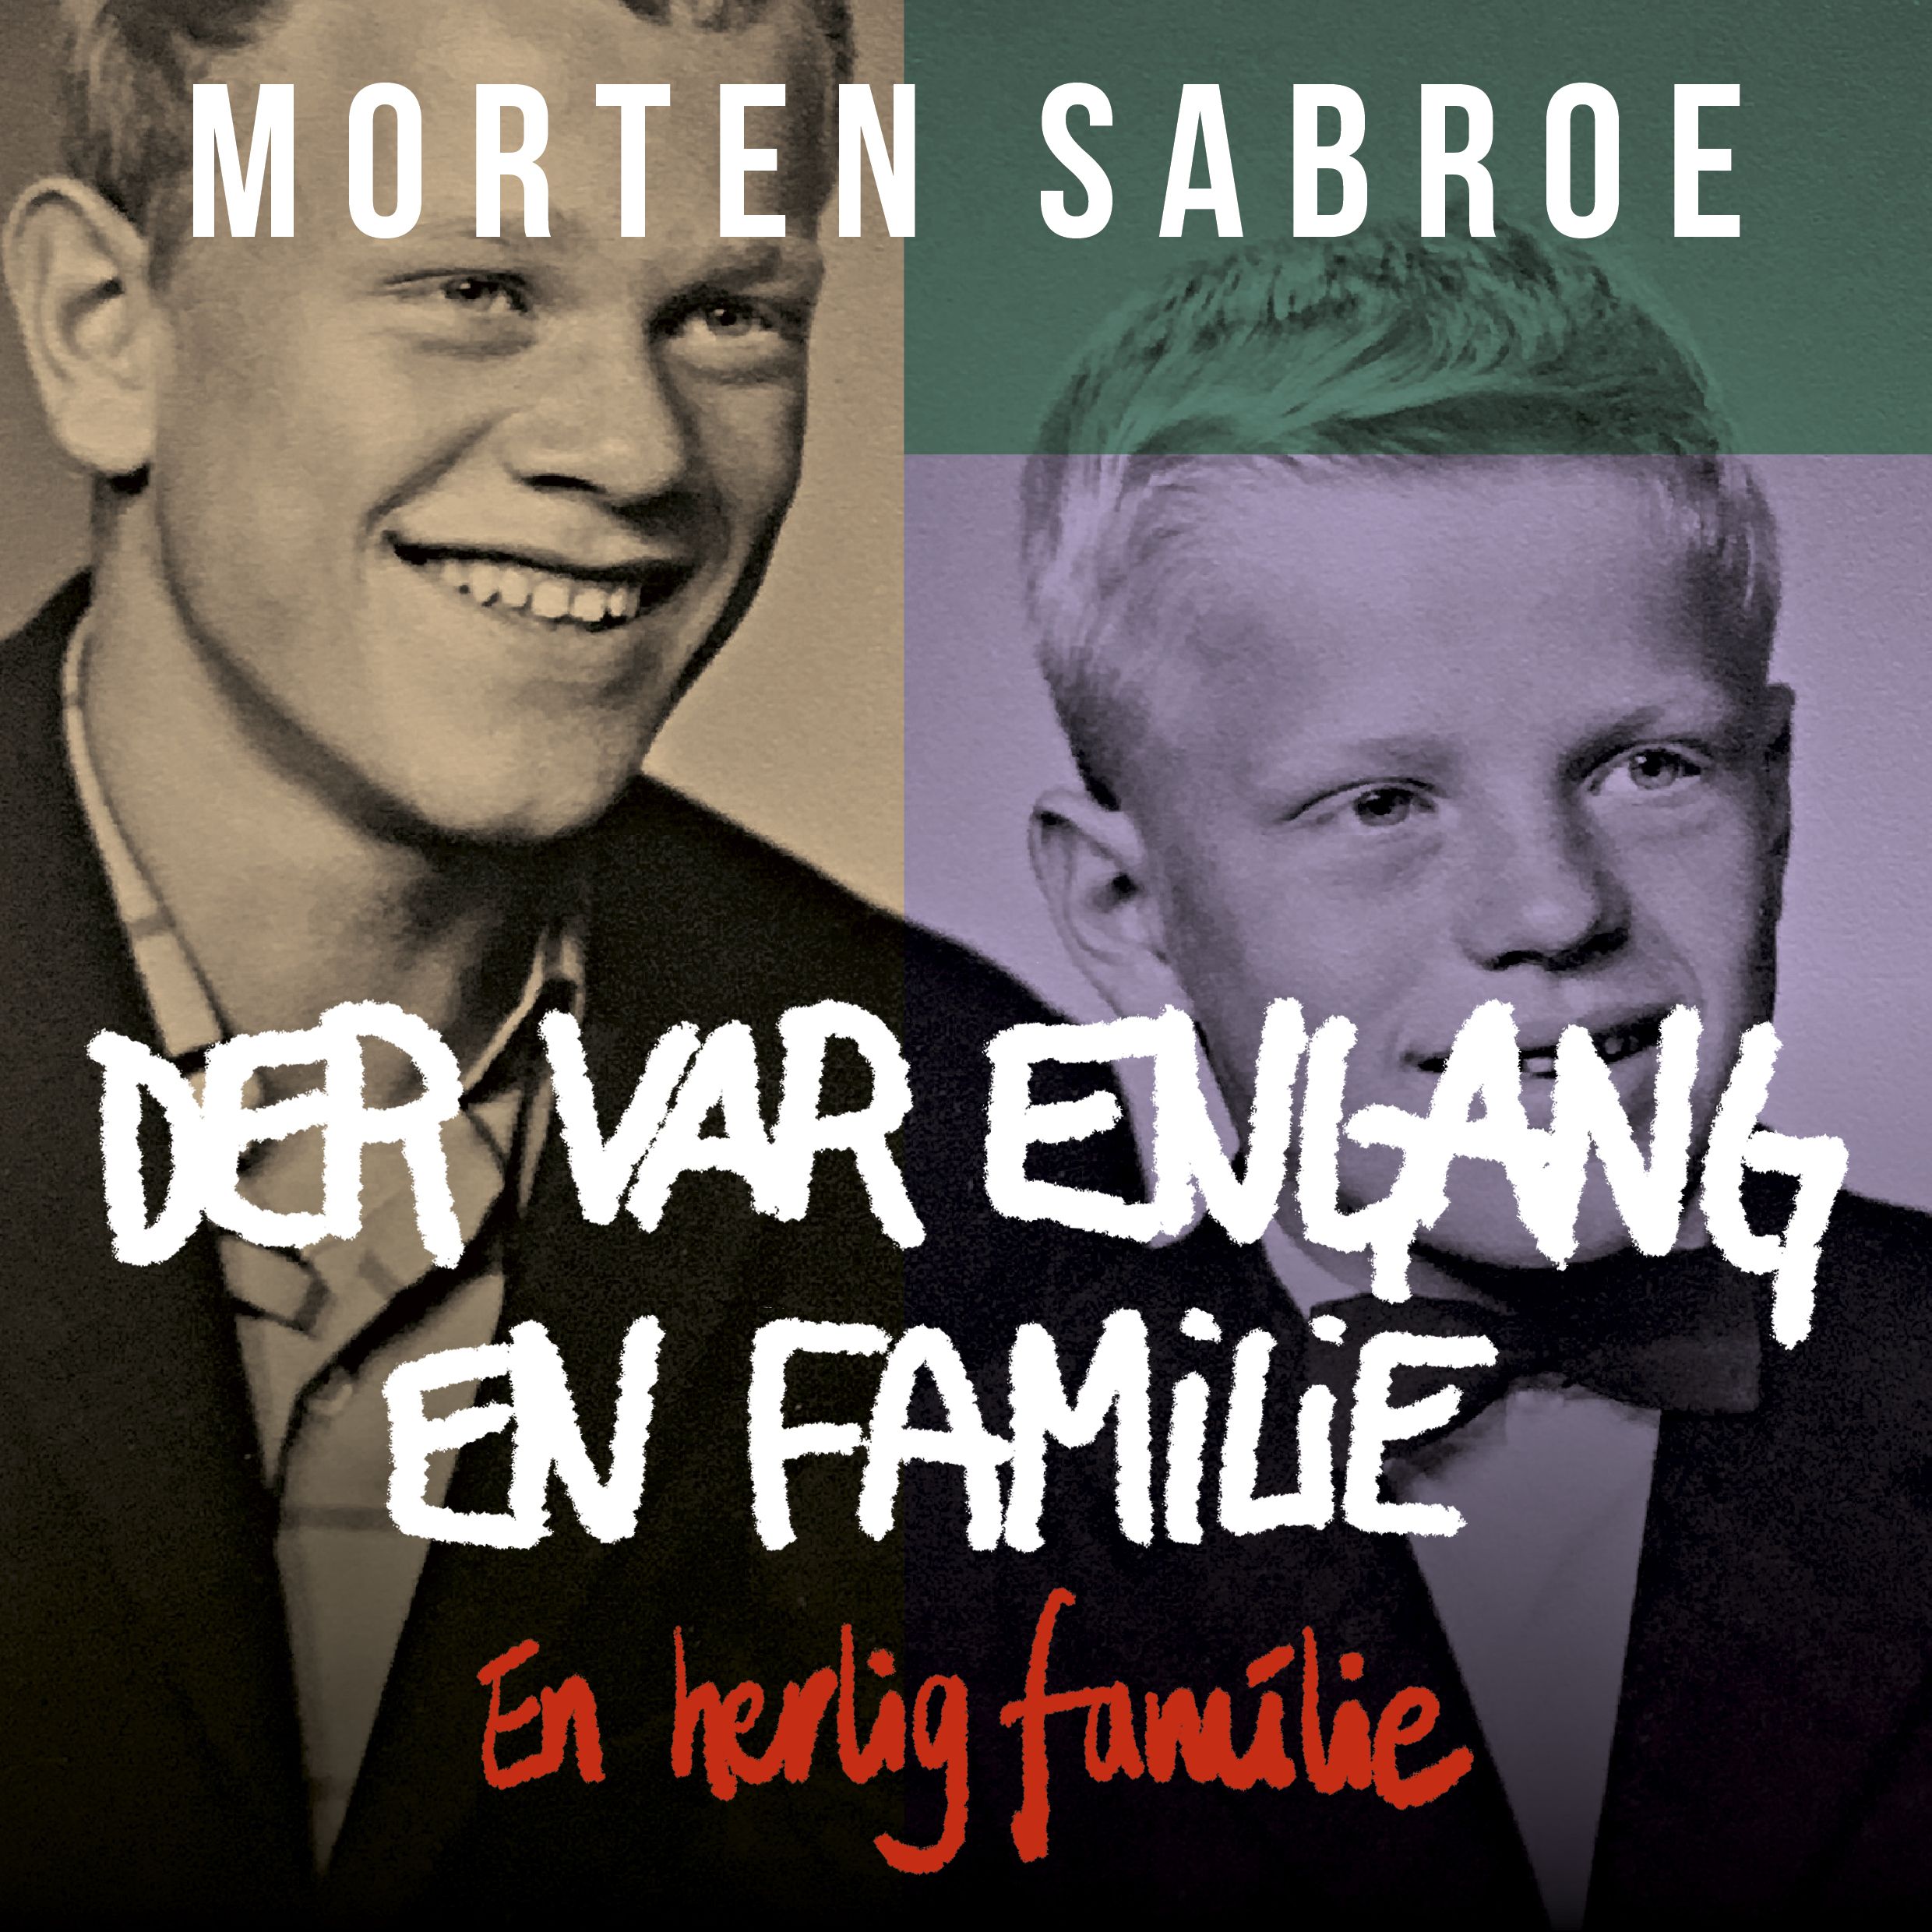 Der var engang en familie, ljudbok av Morten Sabroe